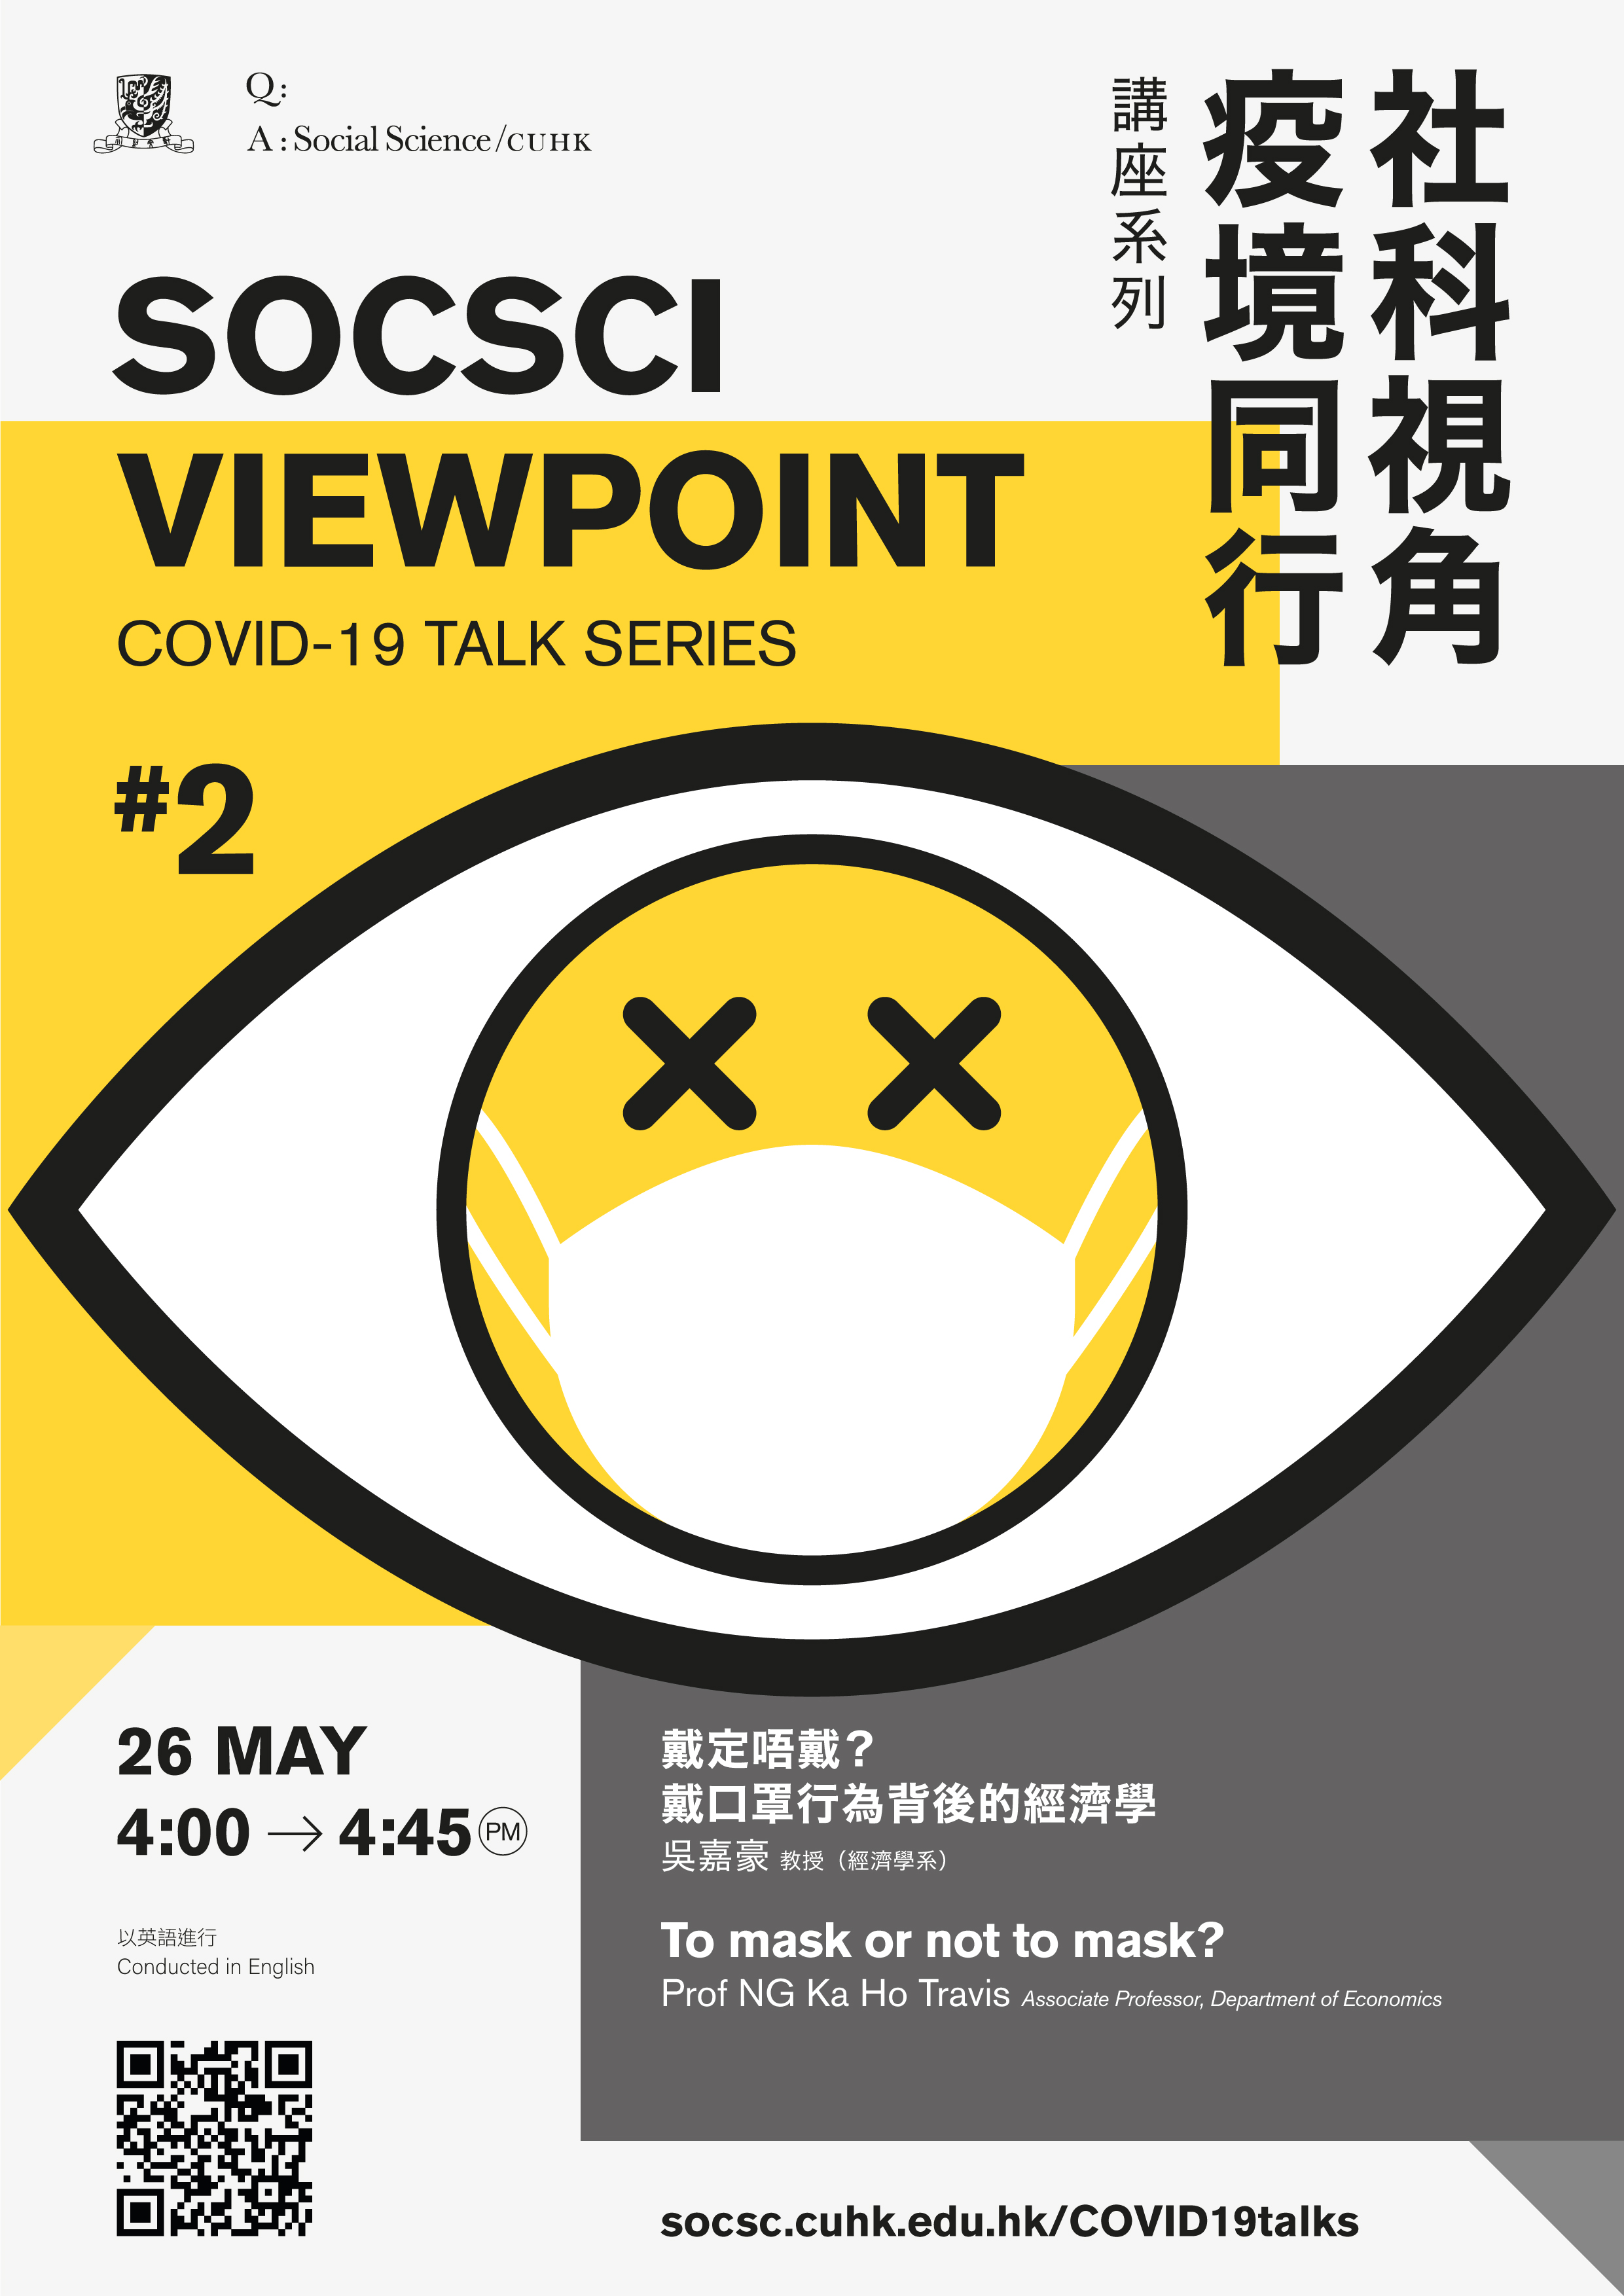 CUHK SS SocSci Viewpoint COVID 19 Talk Series D1 02